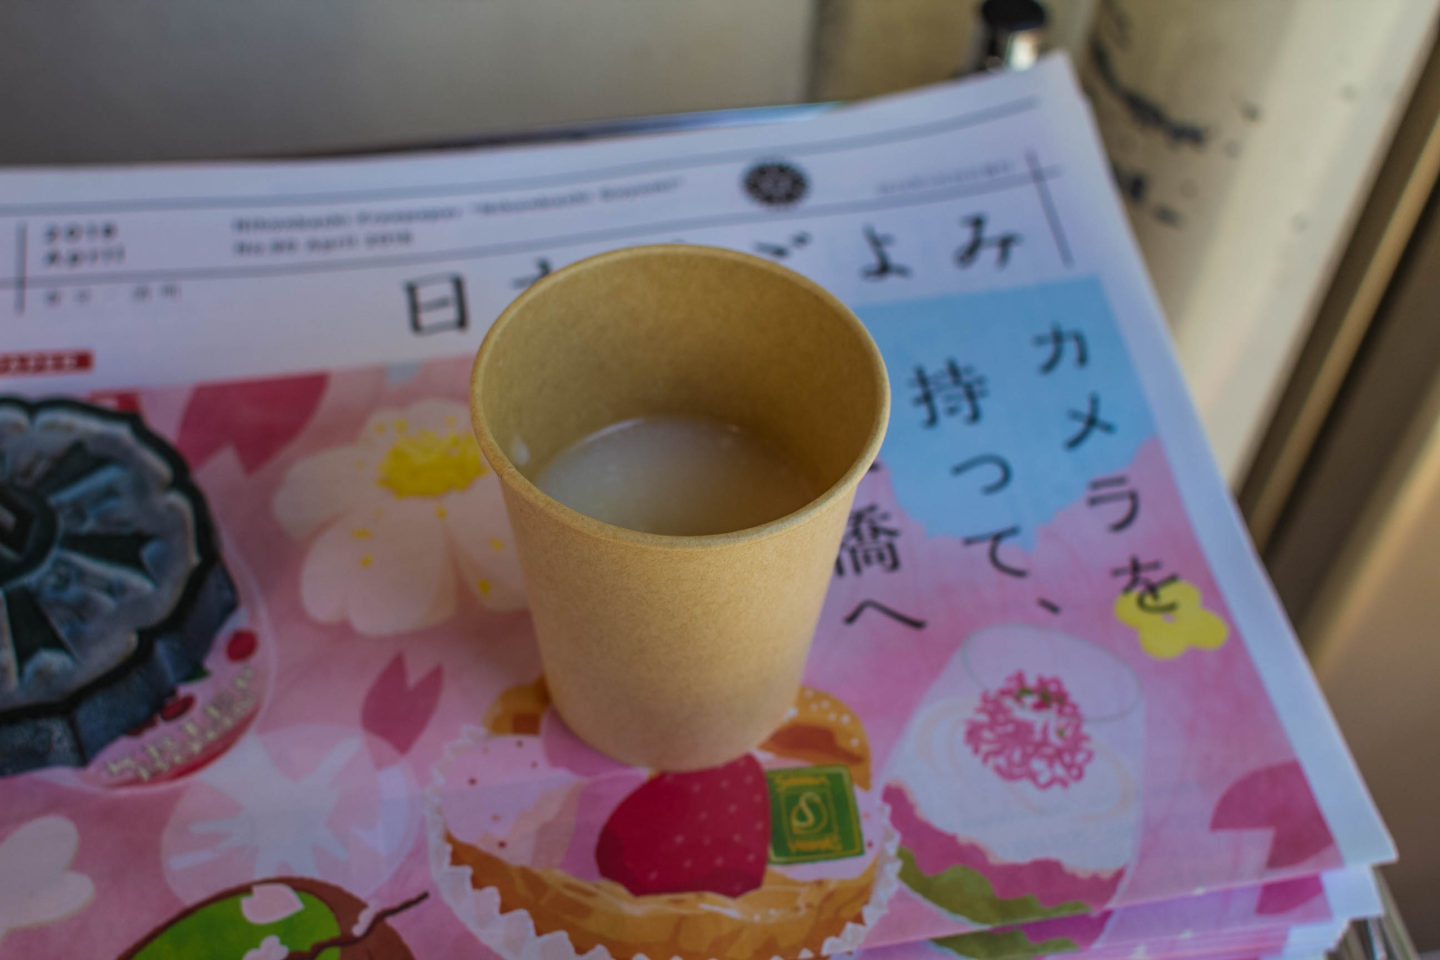 Amazake - fermented rice drink